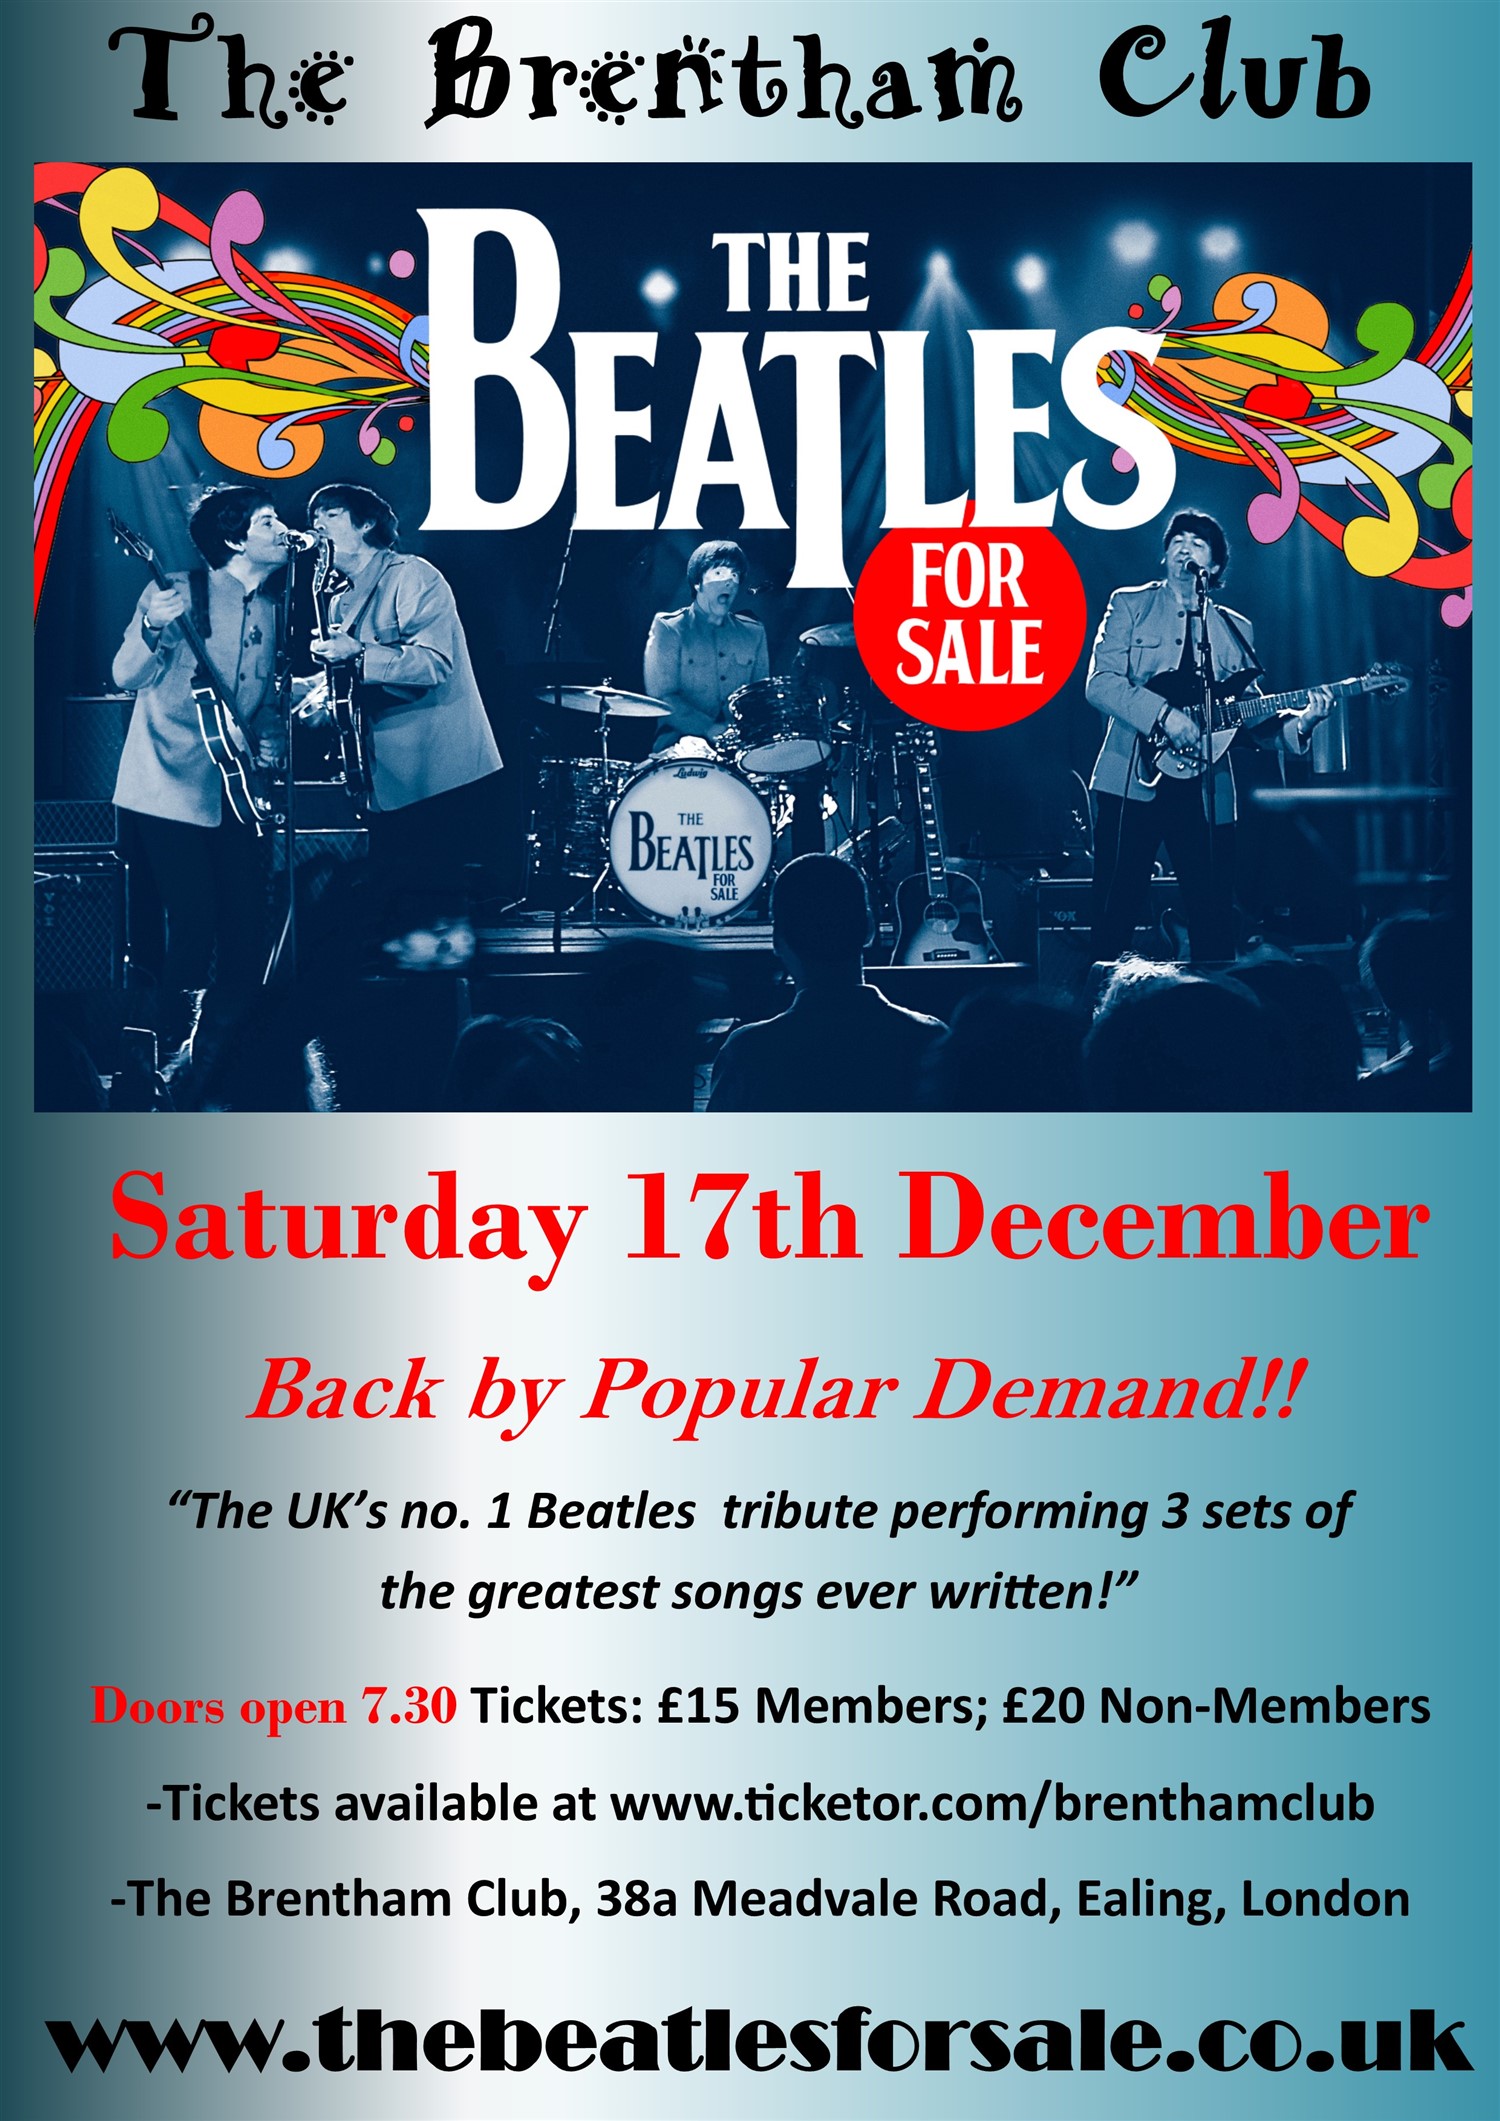 The Beatles for sale  on dic. 17, 19:30@The Brentham Club - Compra entradas y obtén información enBrenthamclub.co.uk 